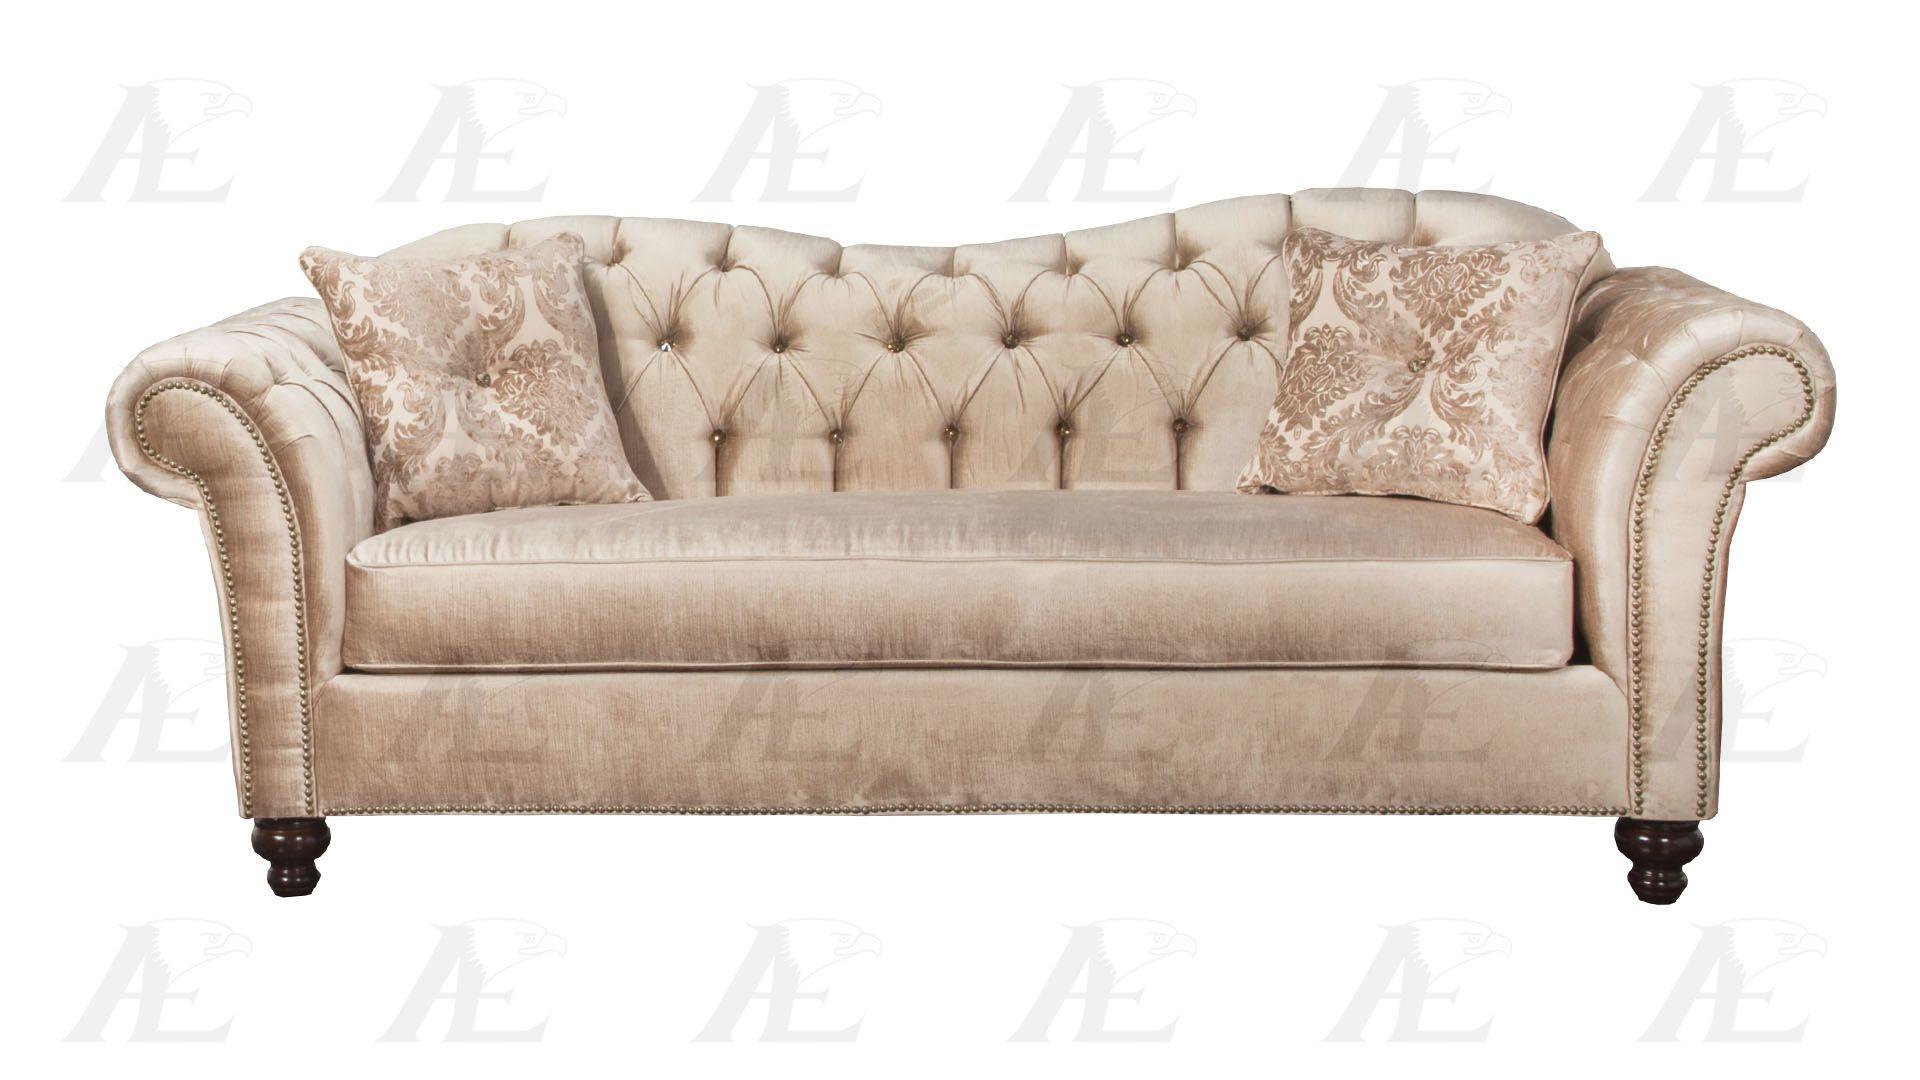 

    
American Eagle Furniture AE2600-CH Champagne Fabric Tufted Sofa Contemporary Style
